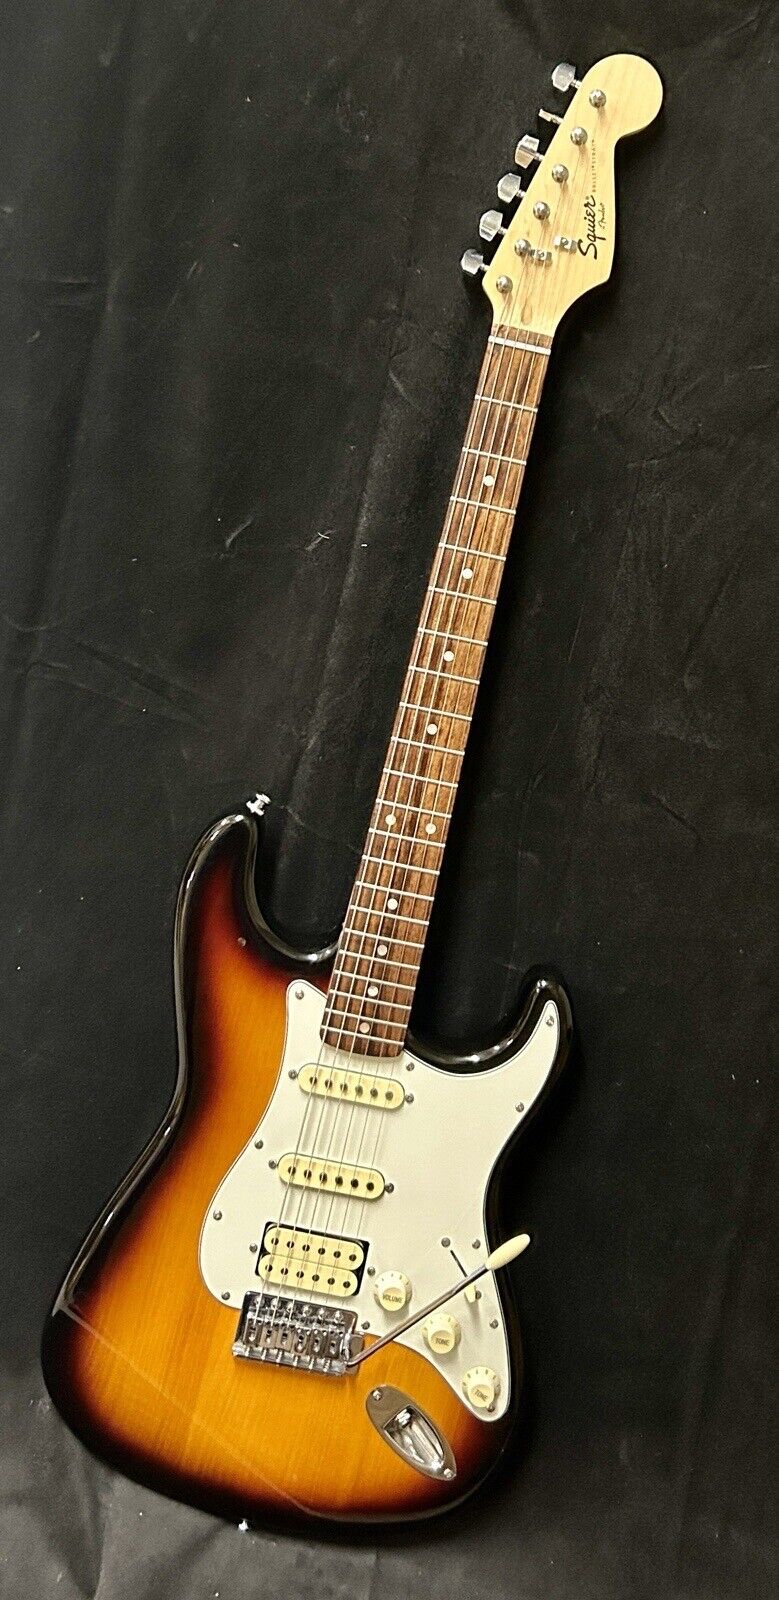 Fender Squier Stratocaster Electric Guitar - Freshly Set Up